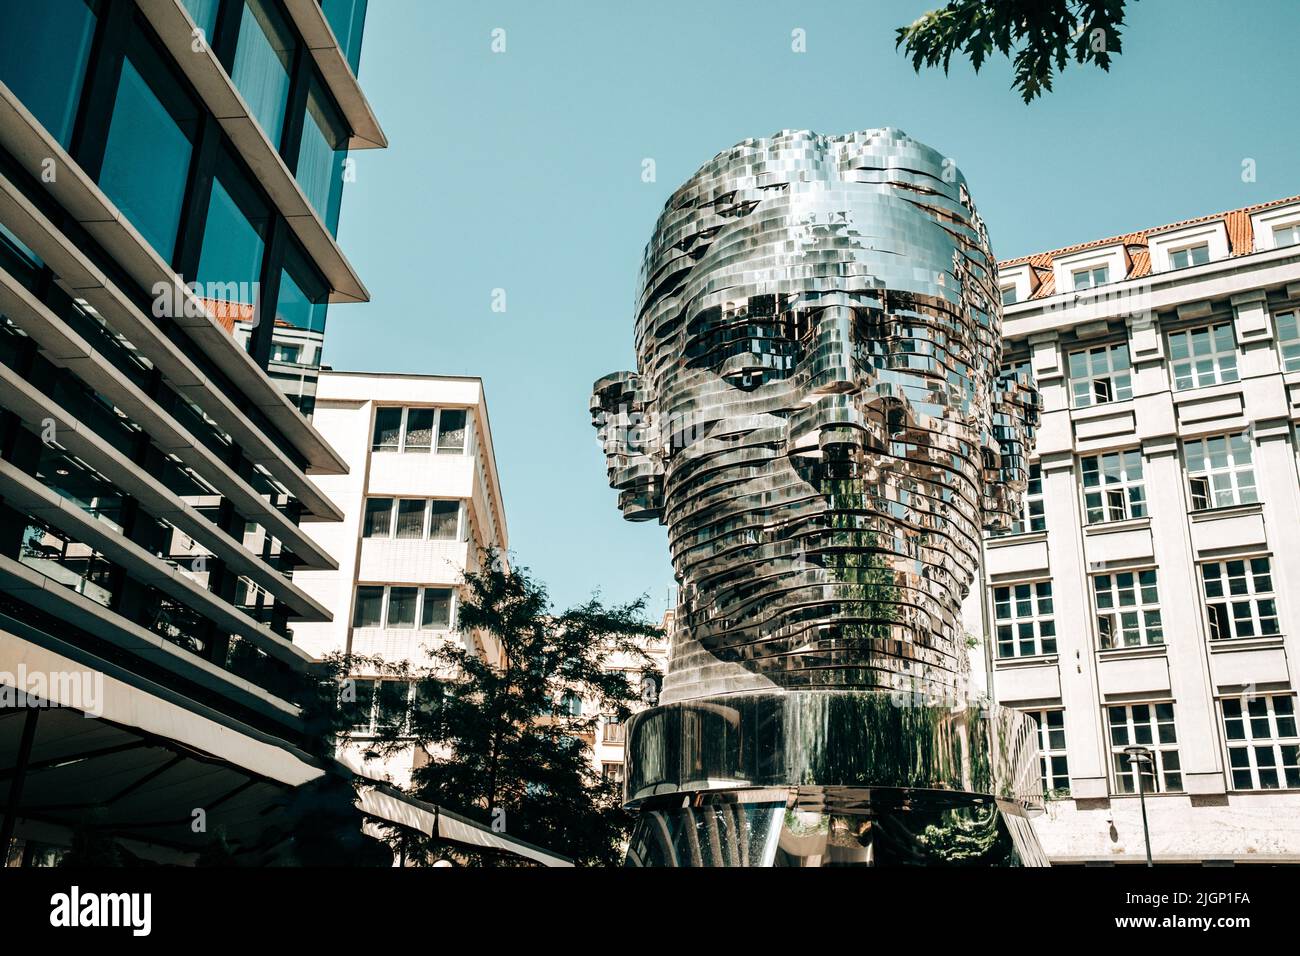 Moving mirror statue of Franz Kafka by David Cerny. Big metalmorphosis head sculpture. Stock Photo